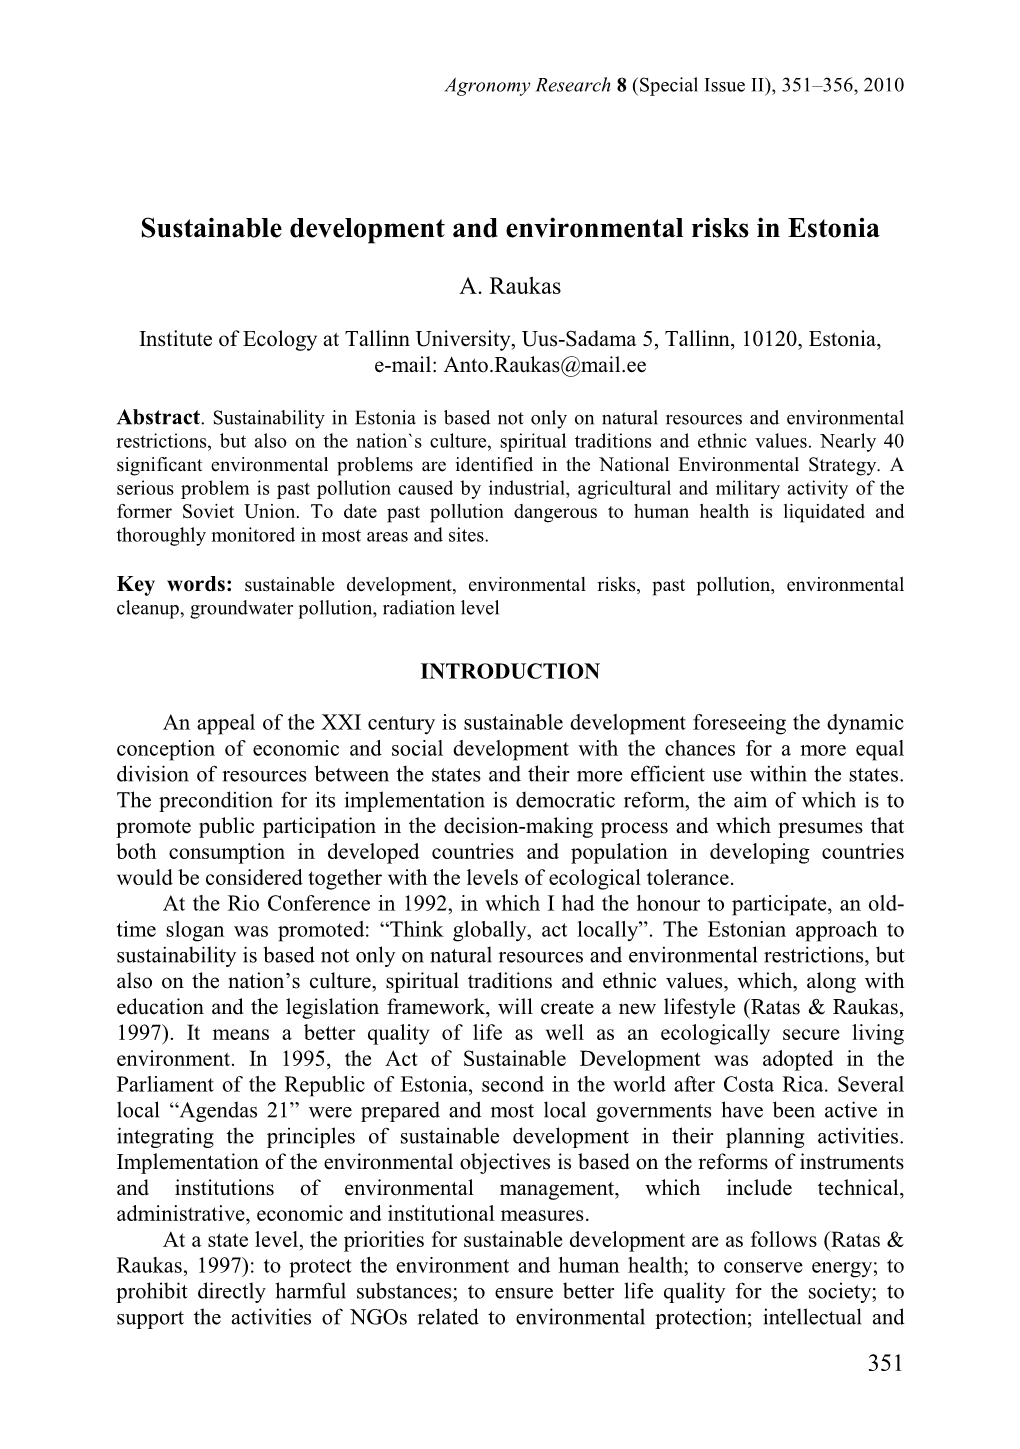 Sustainable Development and Environmental Risks in Estonia